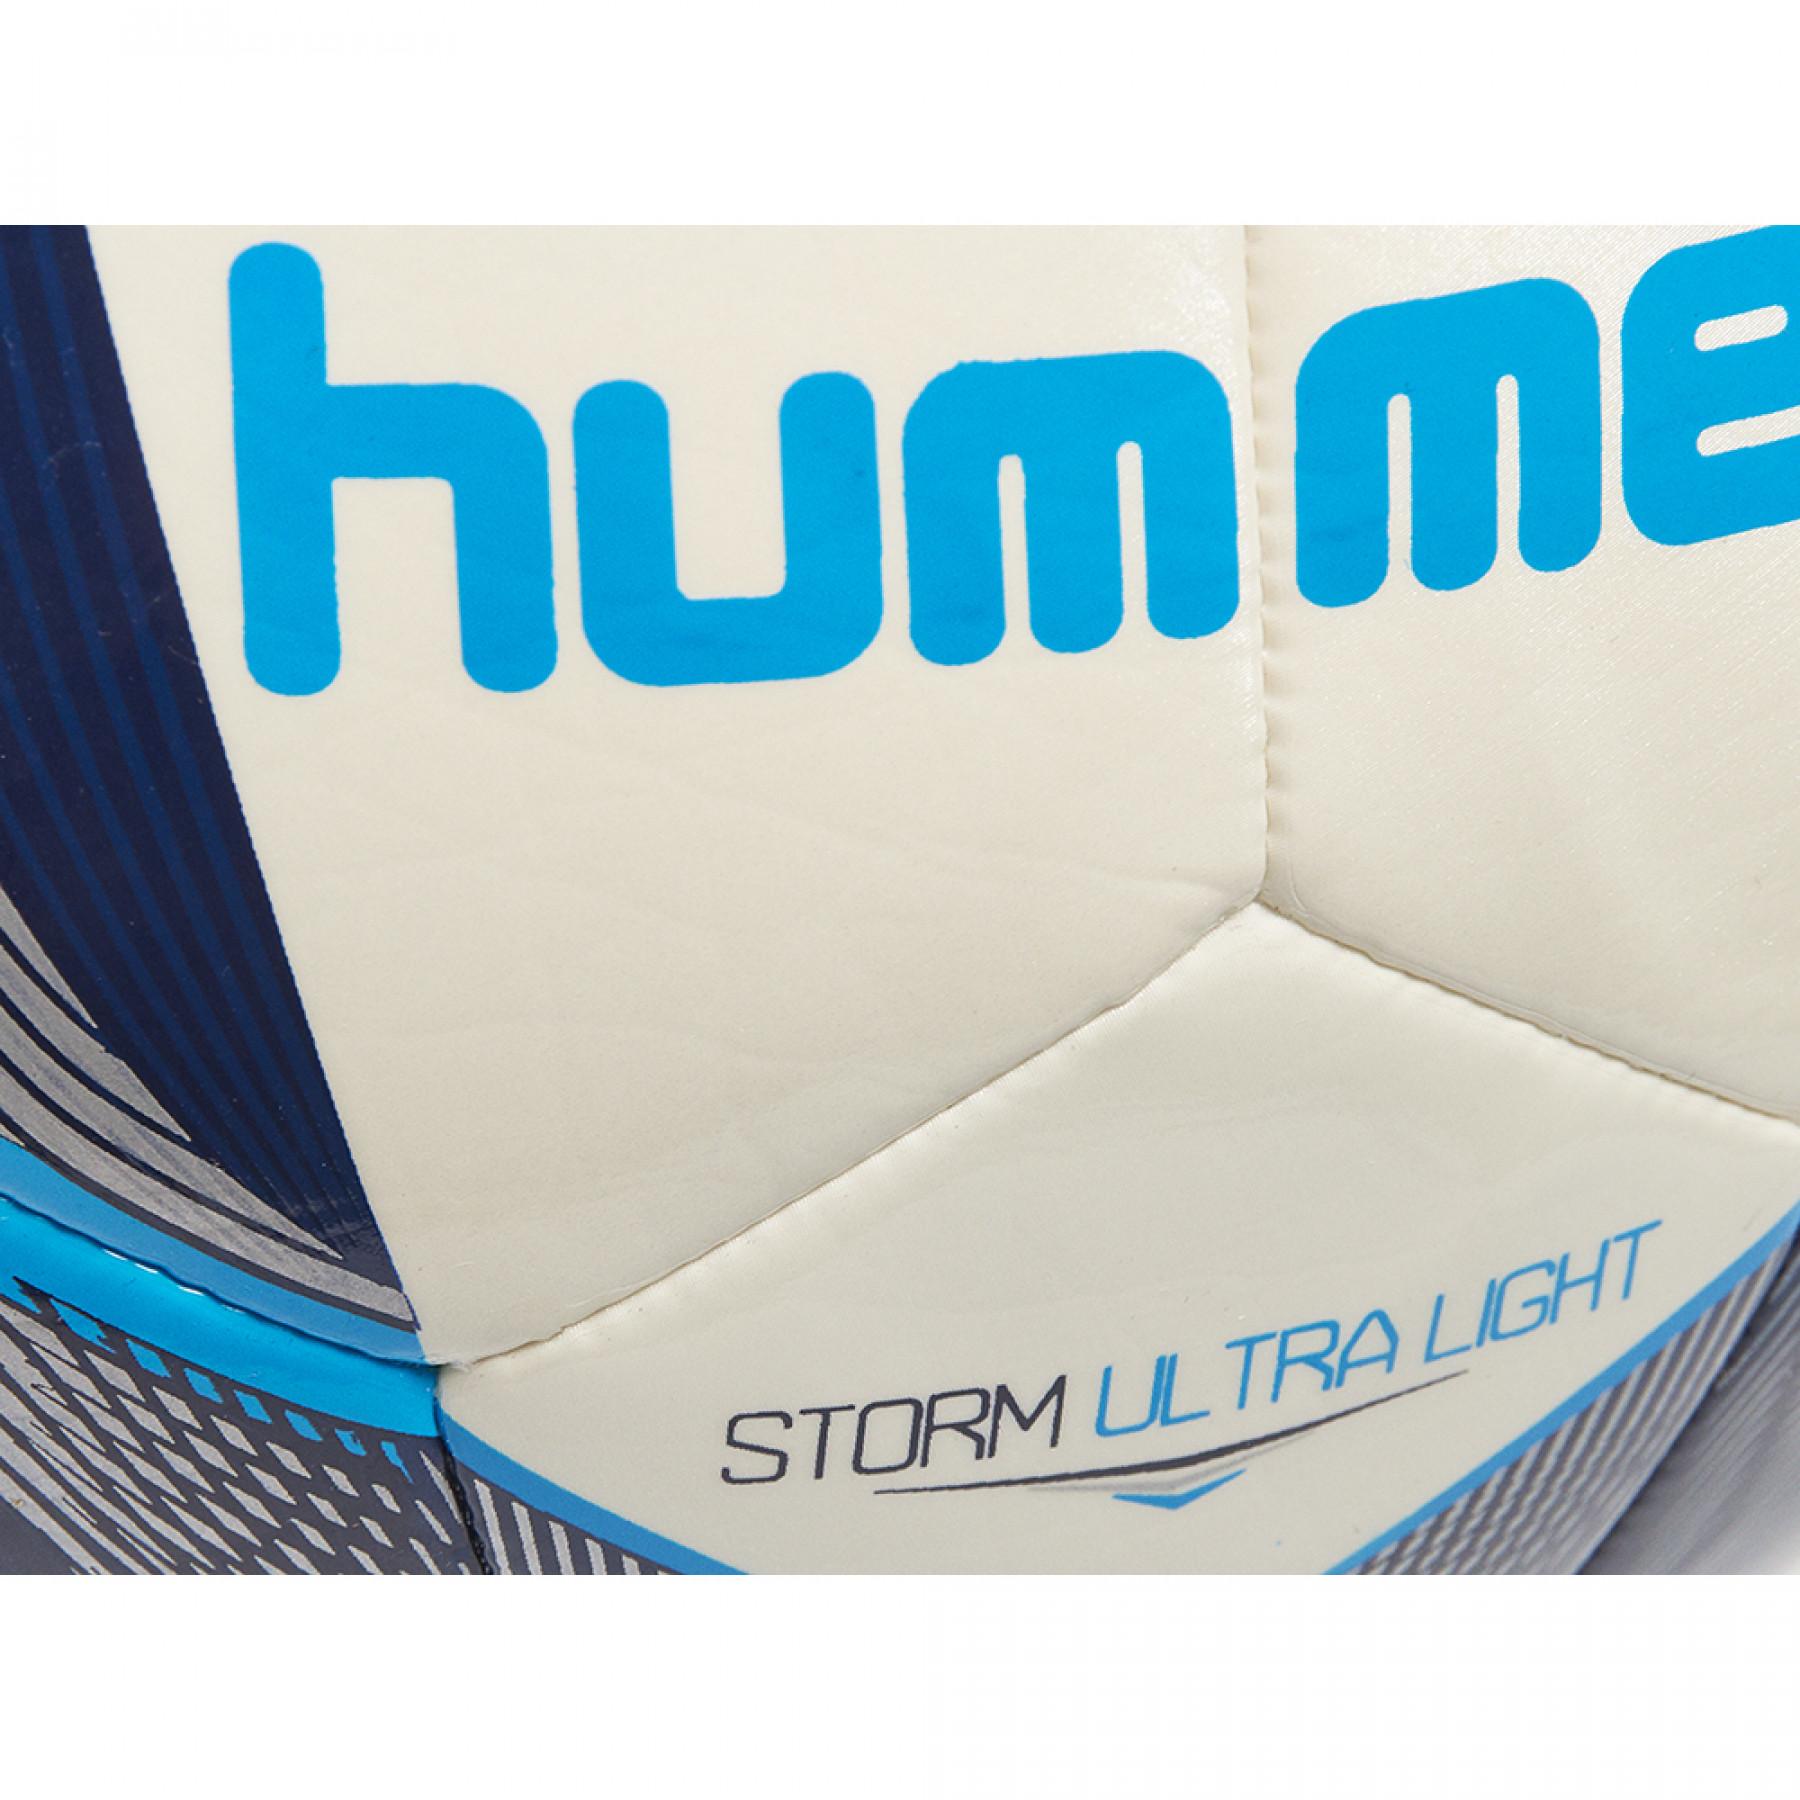 Fußball Hummel storm ultra light fb